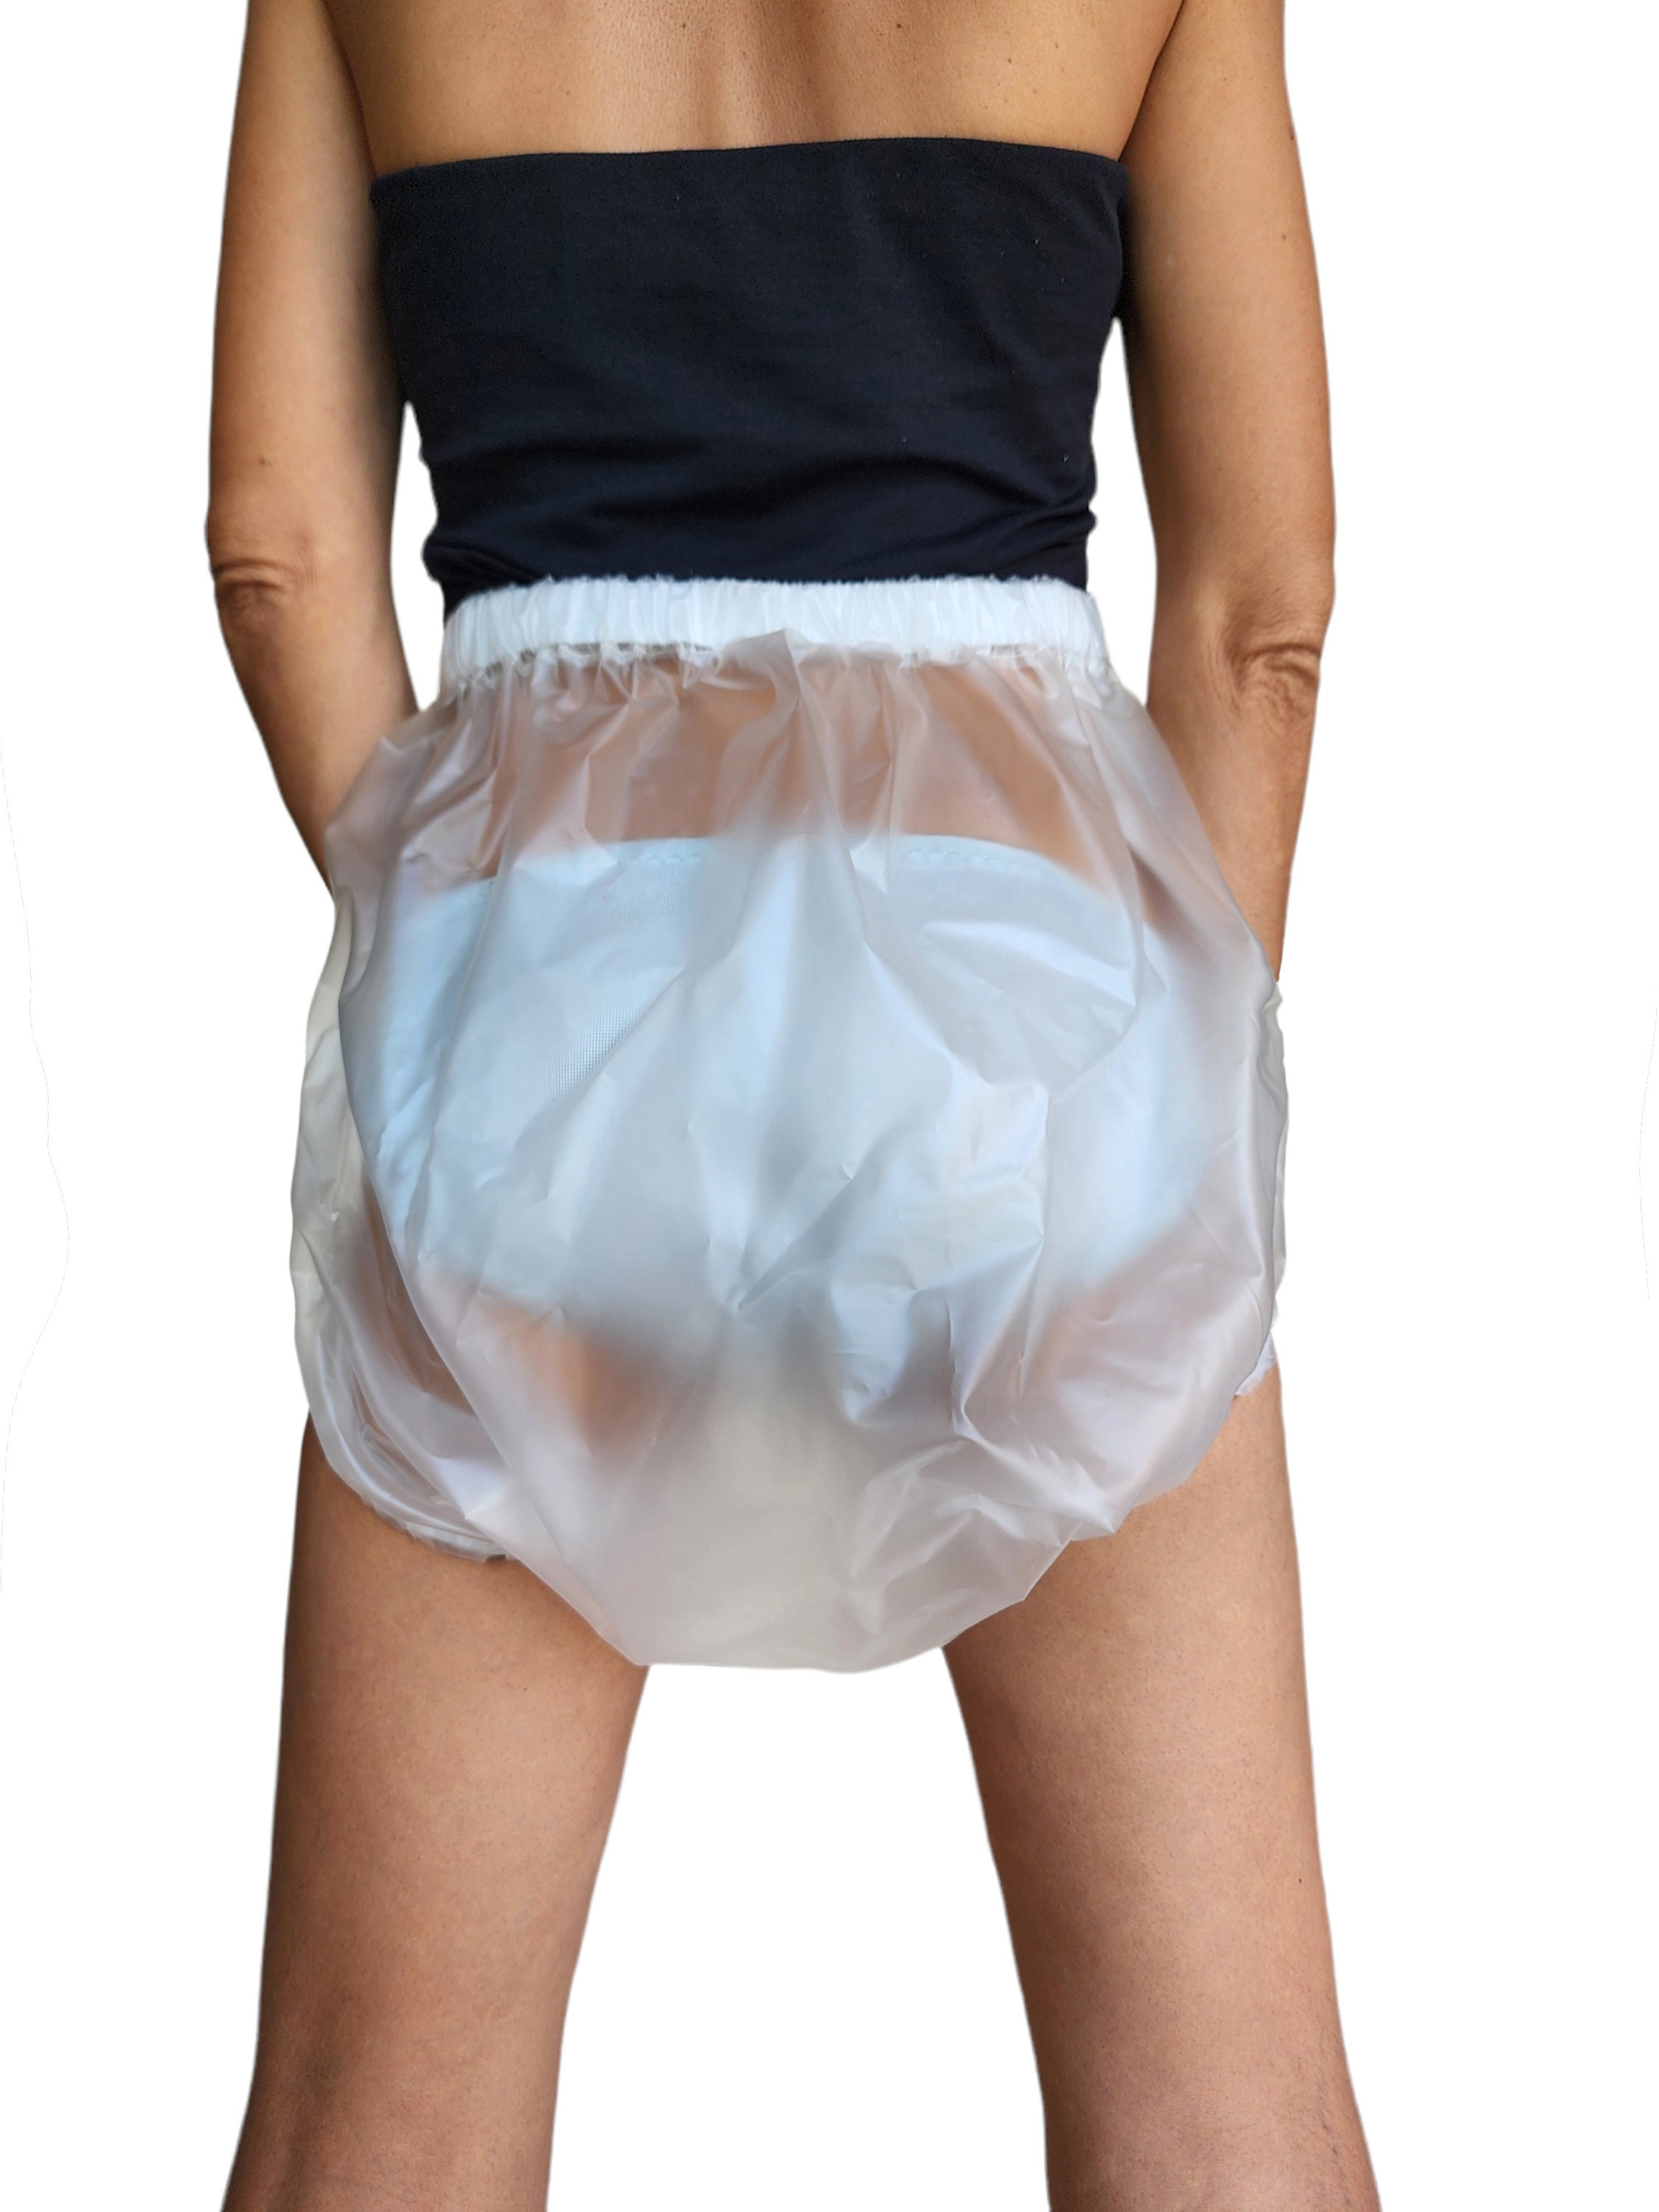 Baggy PVC Panties Briefs Wide Crotch Diaper Cover Punishment Pants Knickers